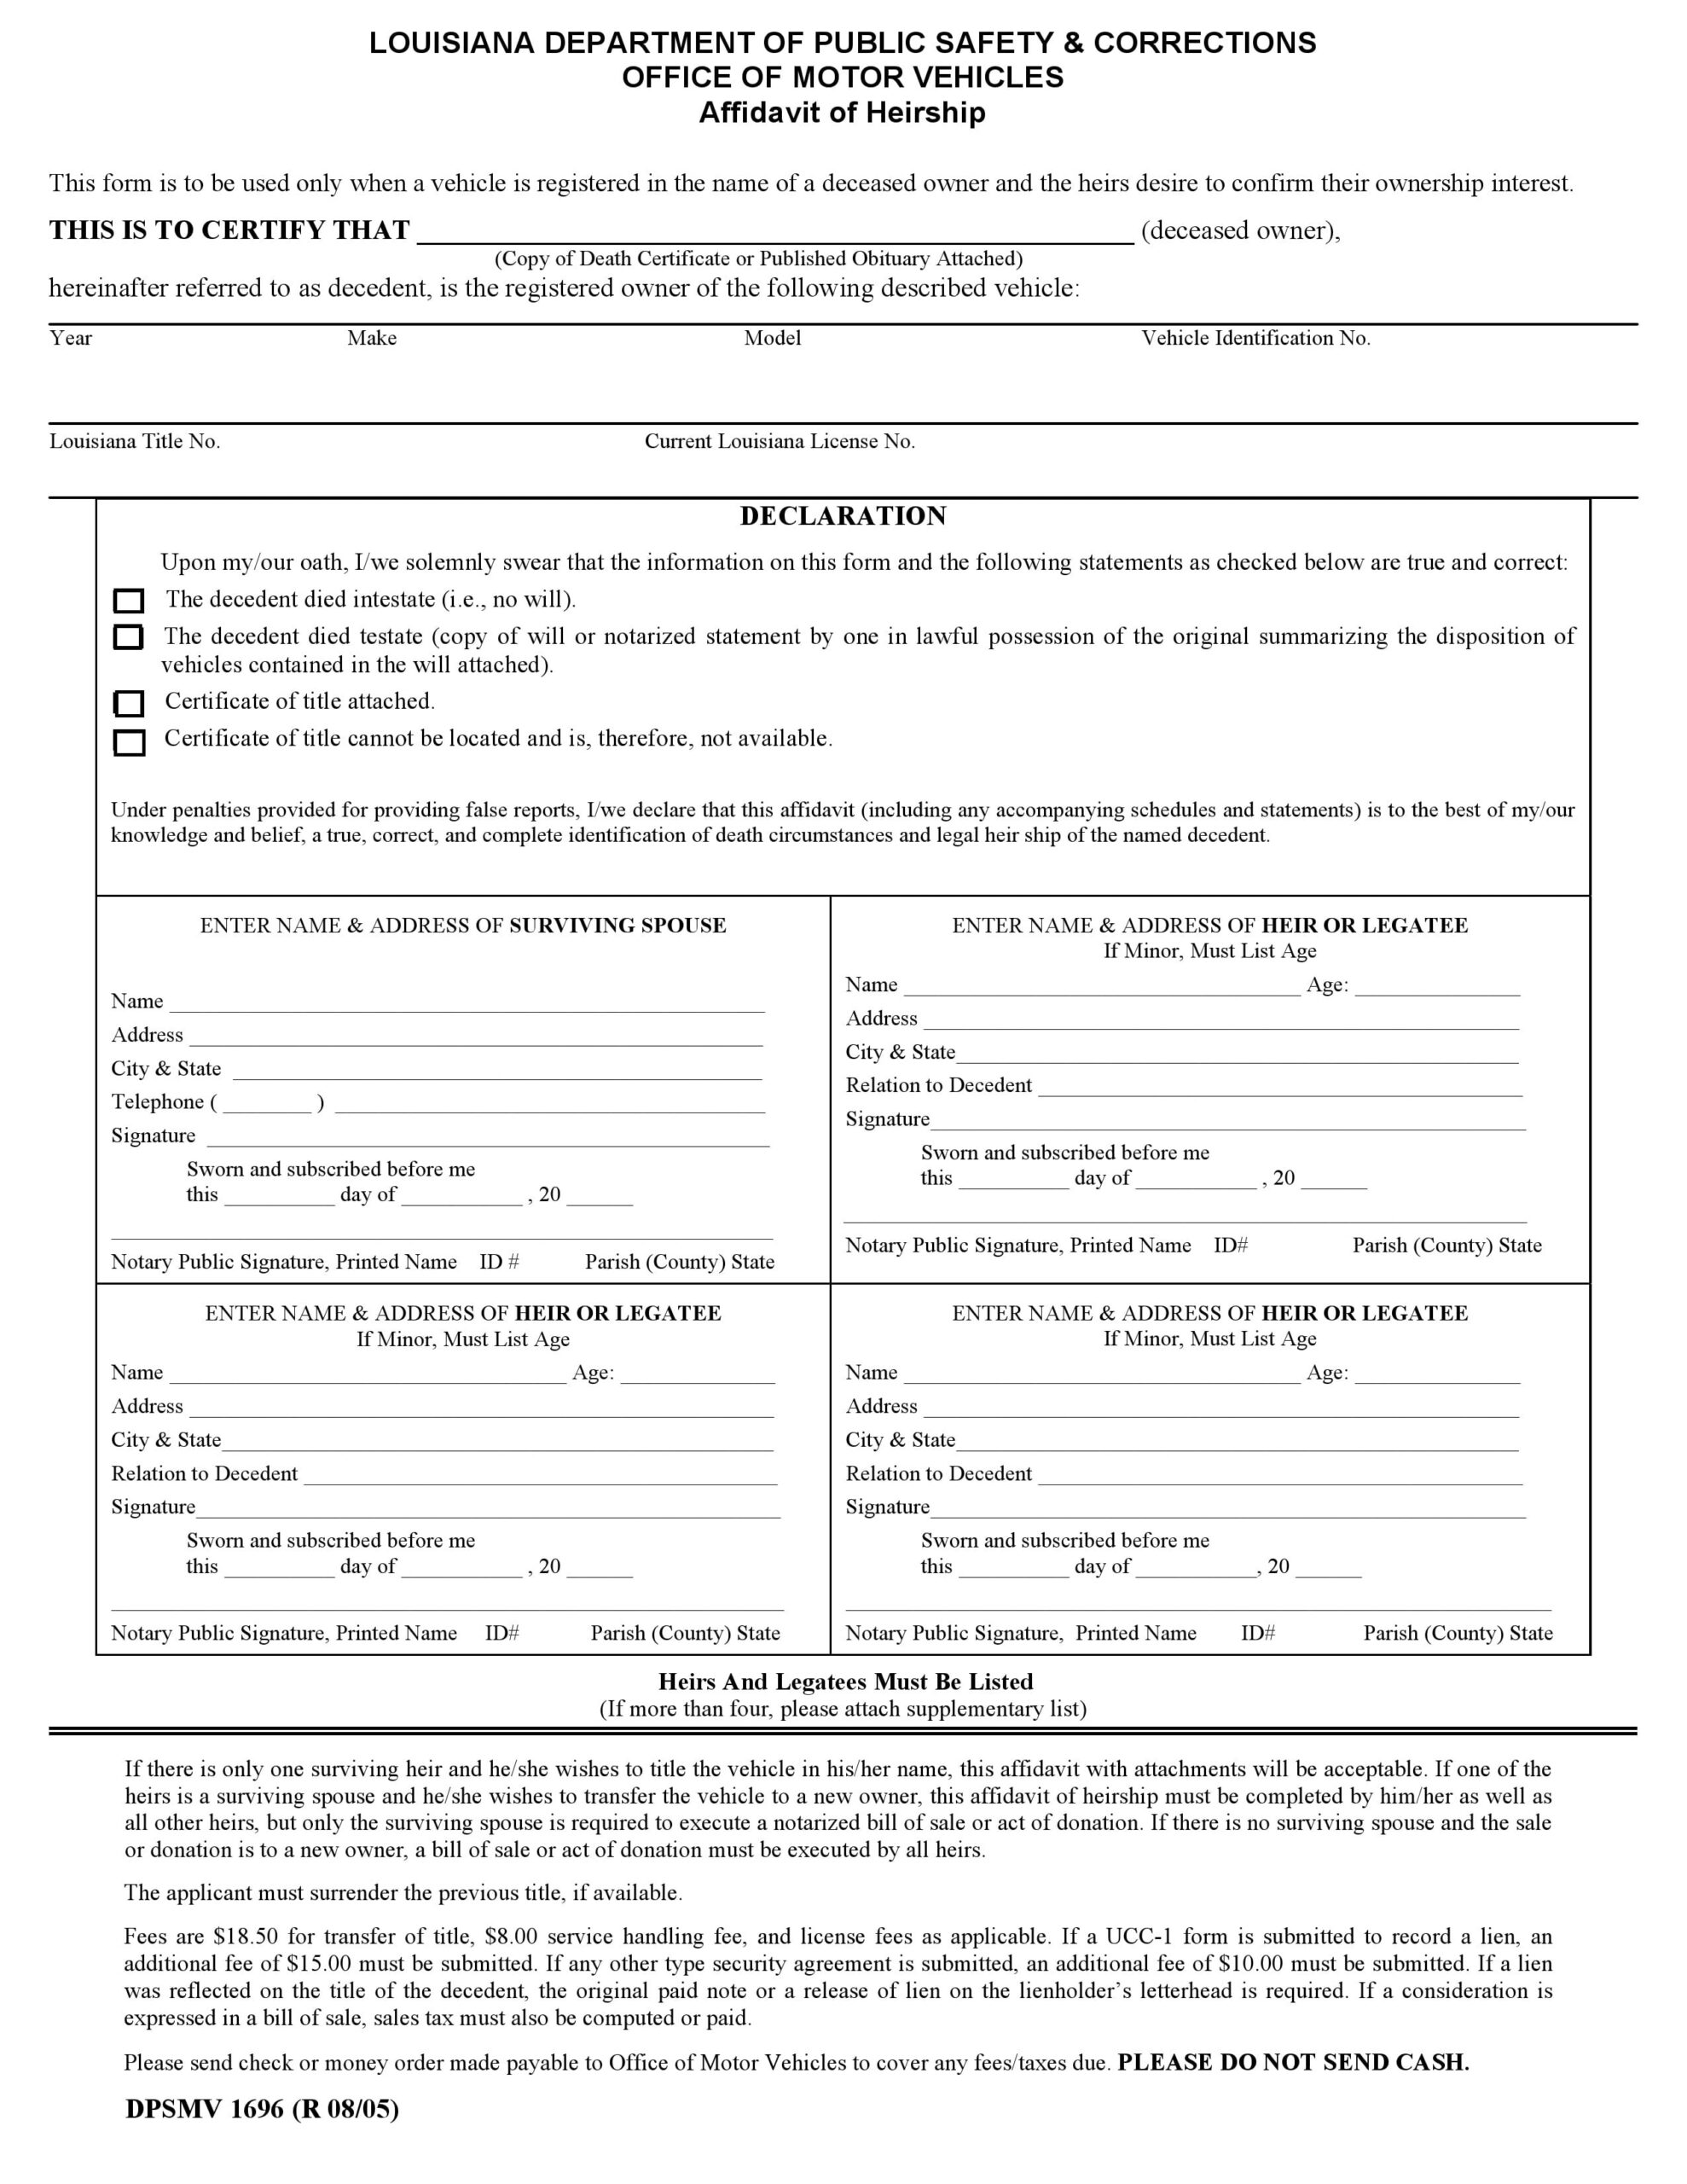 Louisiana Affidavit Forms Free Louisiana Affidavit Of Heirship Form 